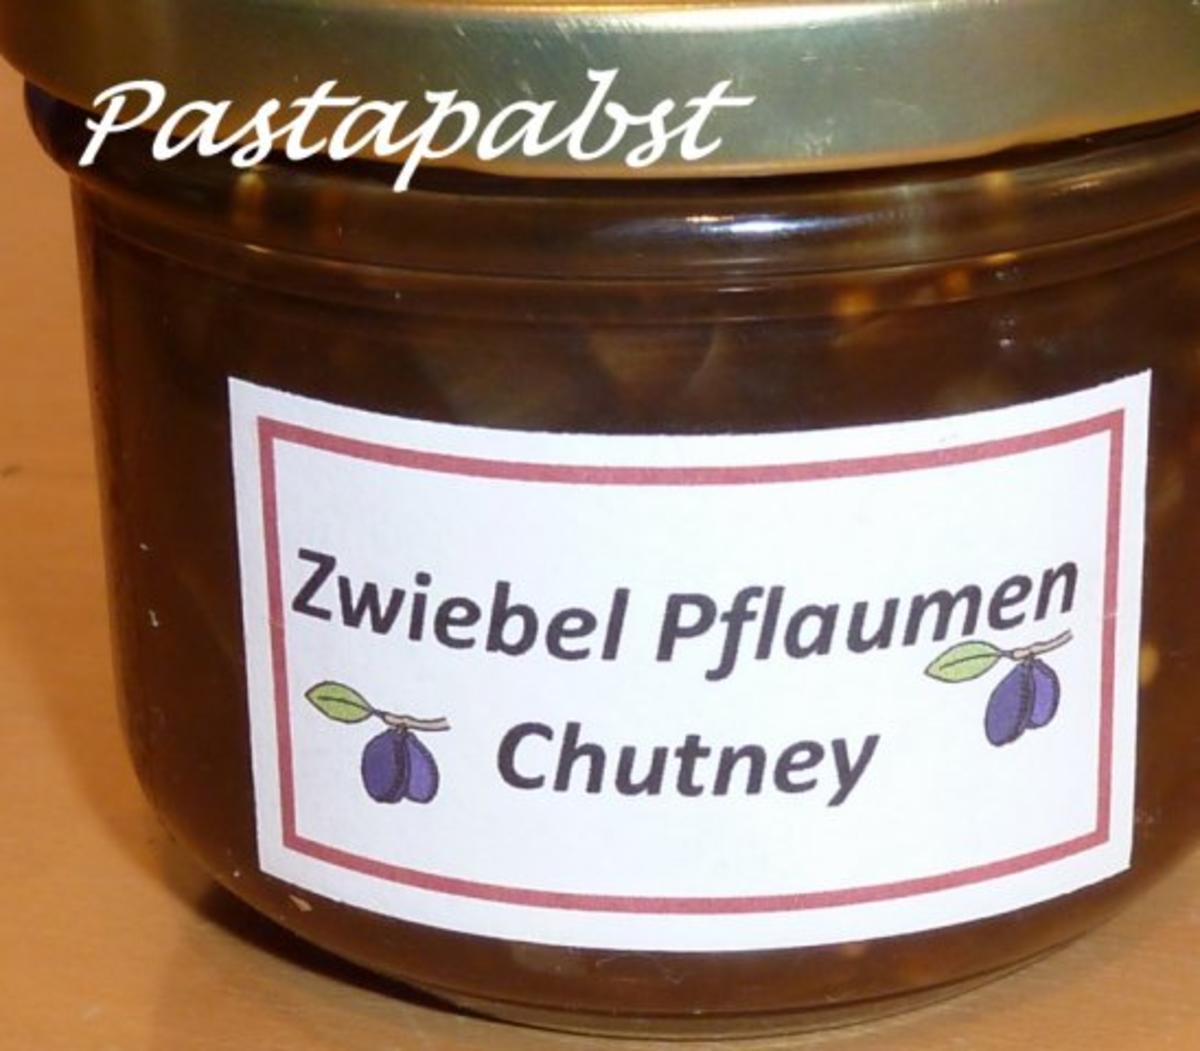 Zwiebel-Pflaumen-Chutney - Rezept mit Bild - kochbar.de